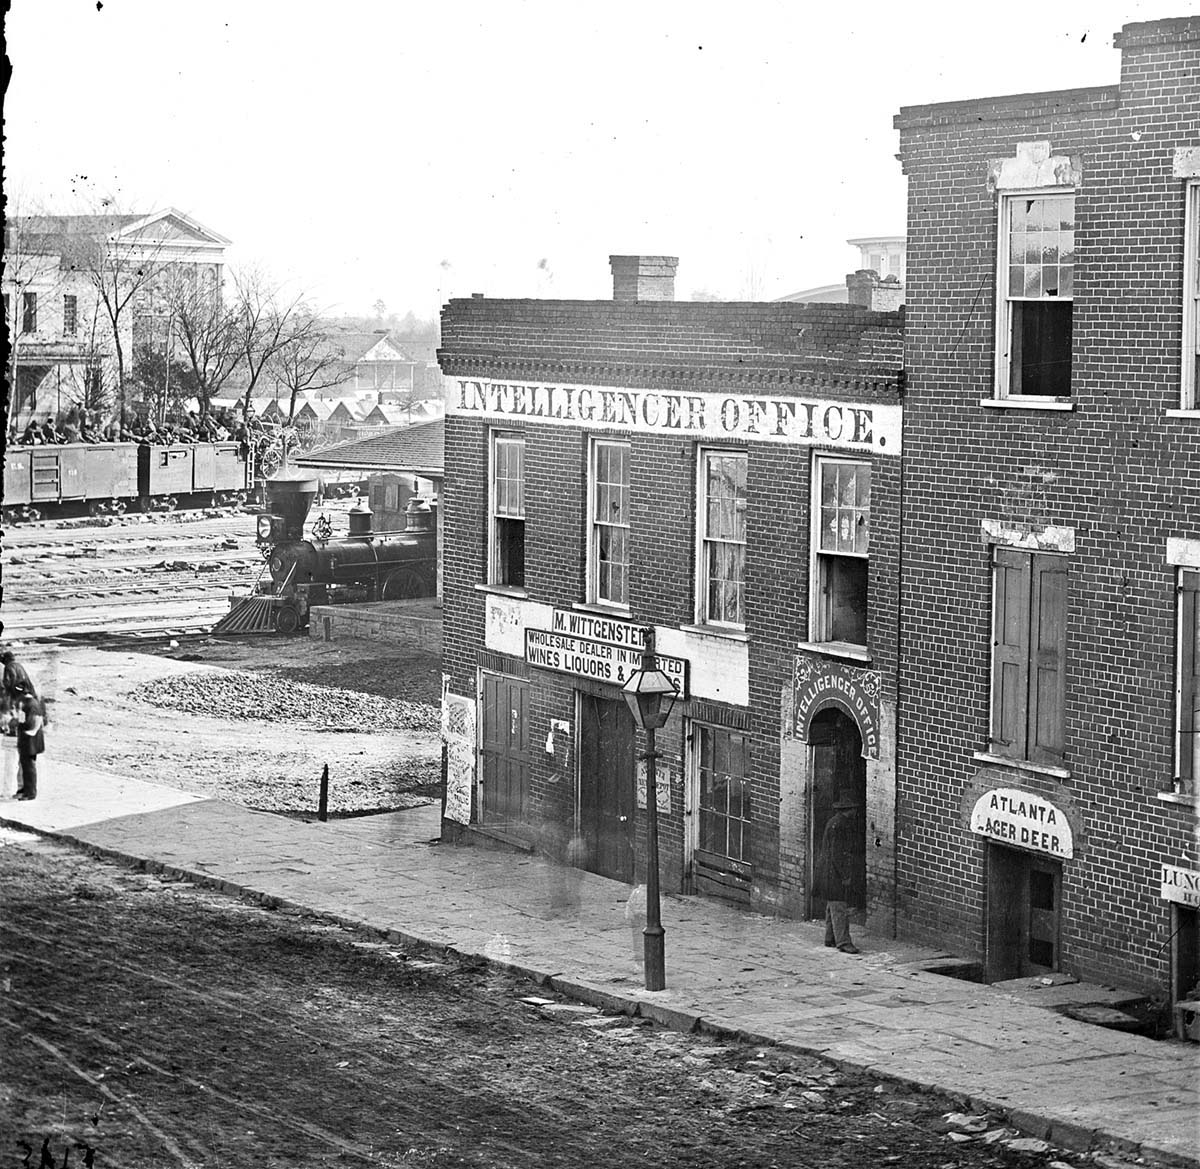 Atlanta, Georgia. Intelligencer newspaper office by the railroad depot, 1864